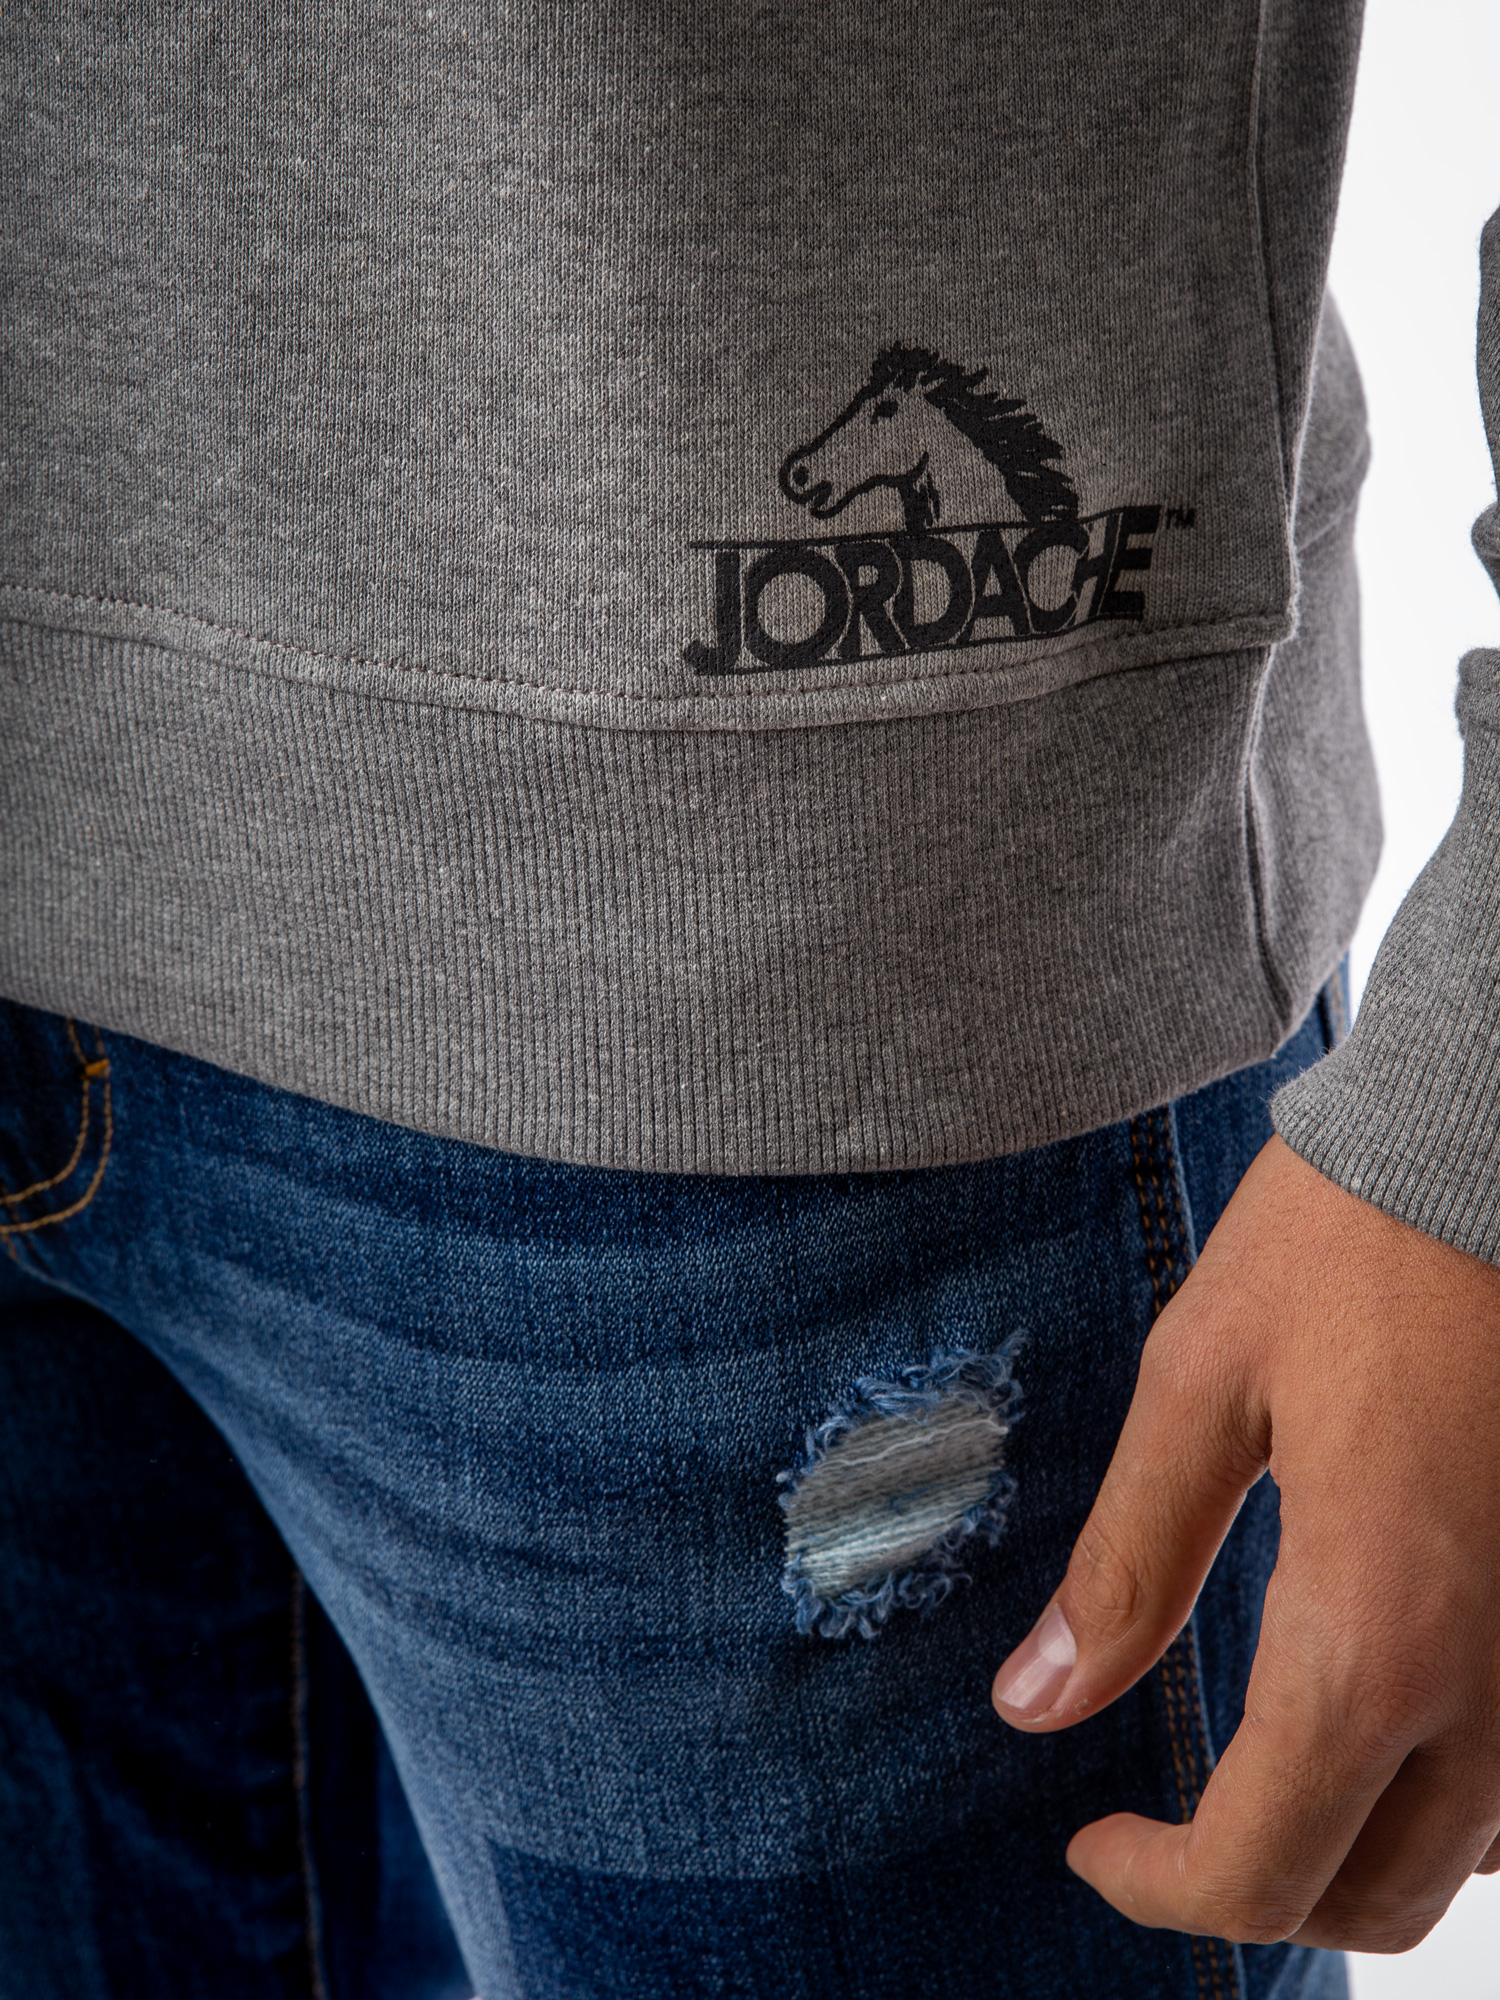 Jordache Vintage Men's Alen Yoke Pullover Sweatshirt, Sizes S-2XL - image 4 of 6